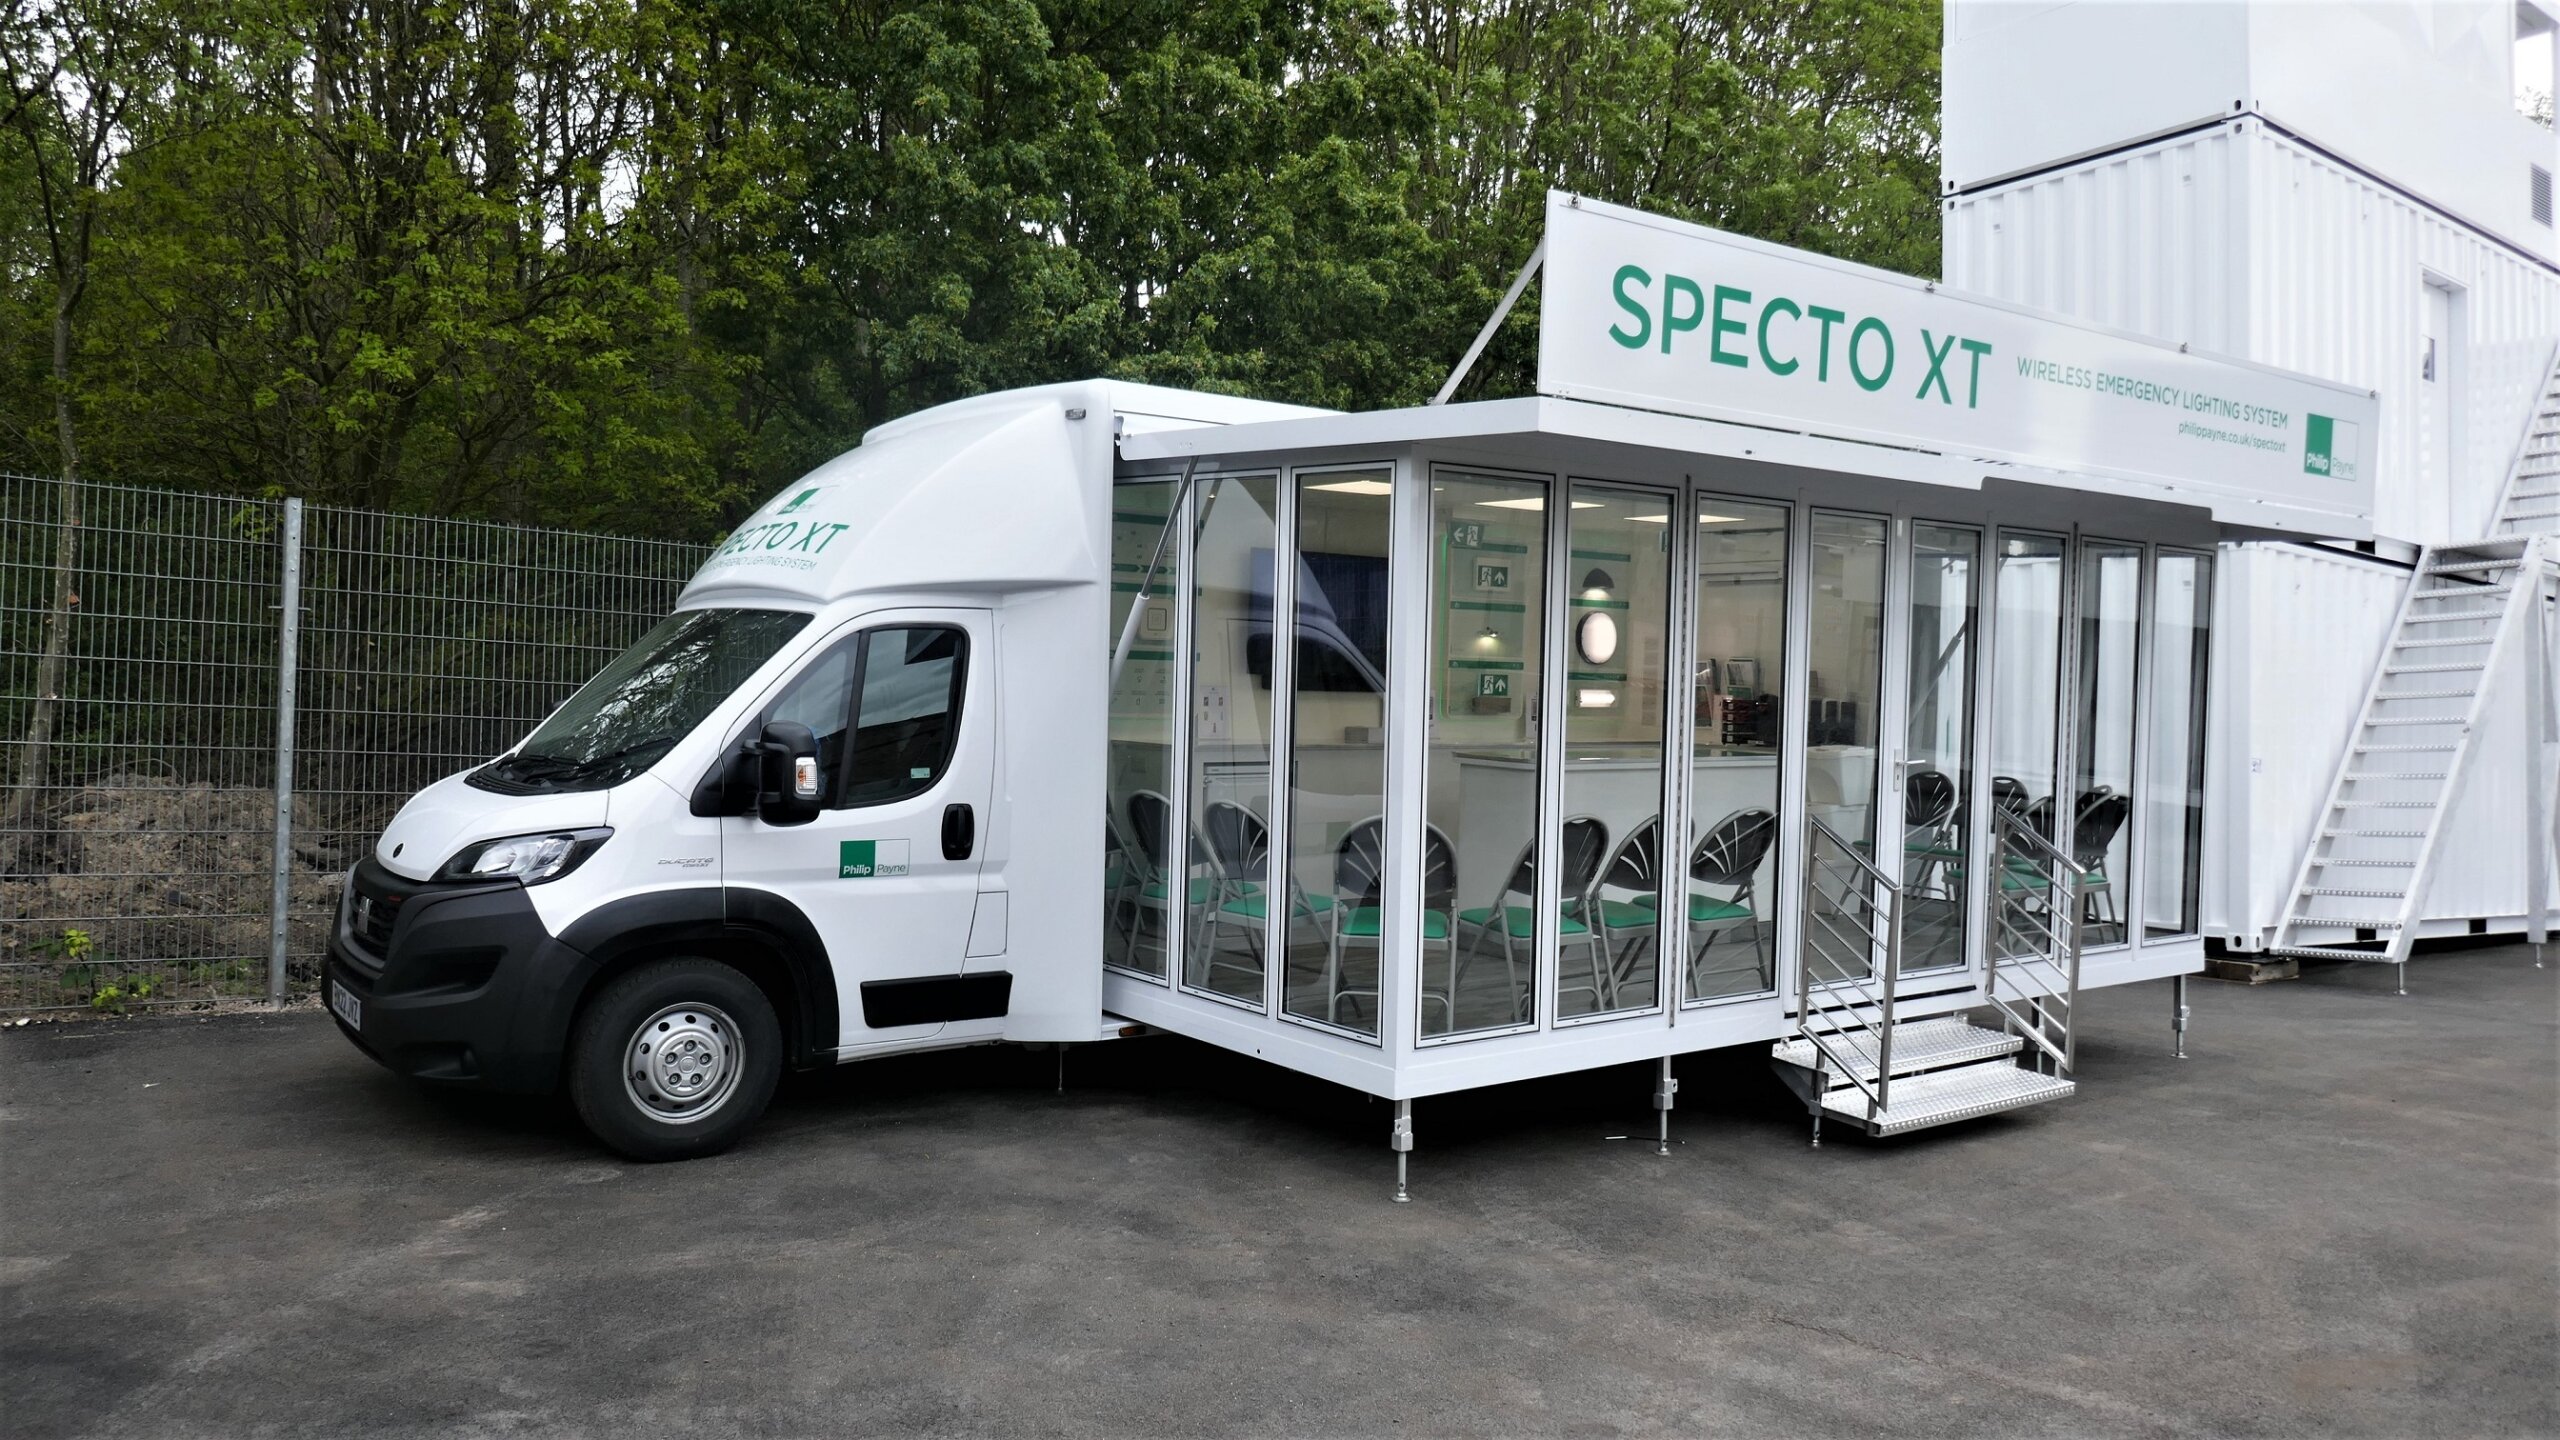 philip payne emergency lighting 5500 kg neat displayflex mobile demonstration exhibition and training vehicle